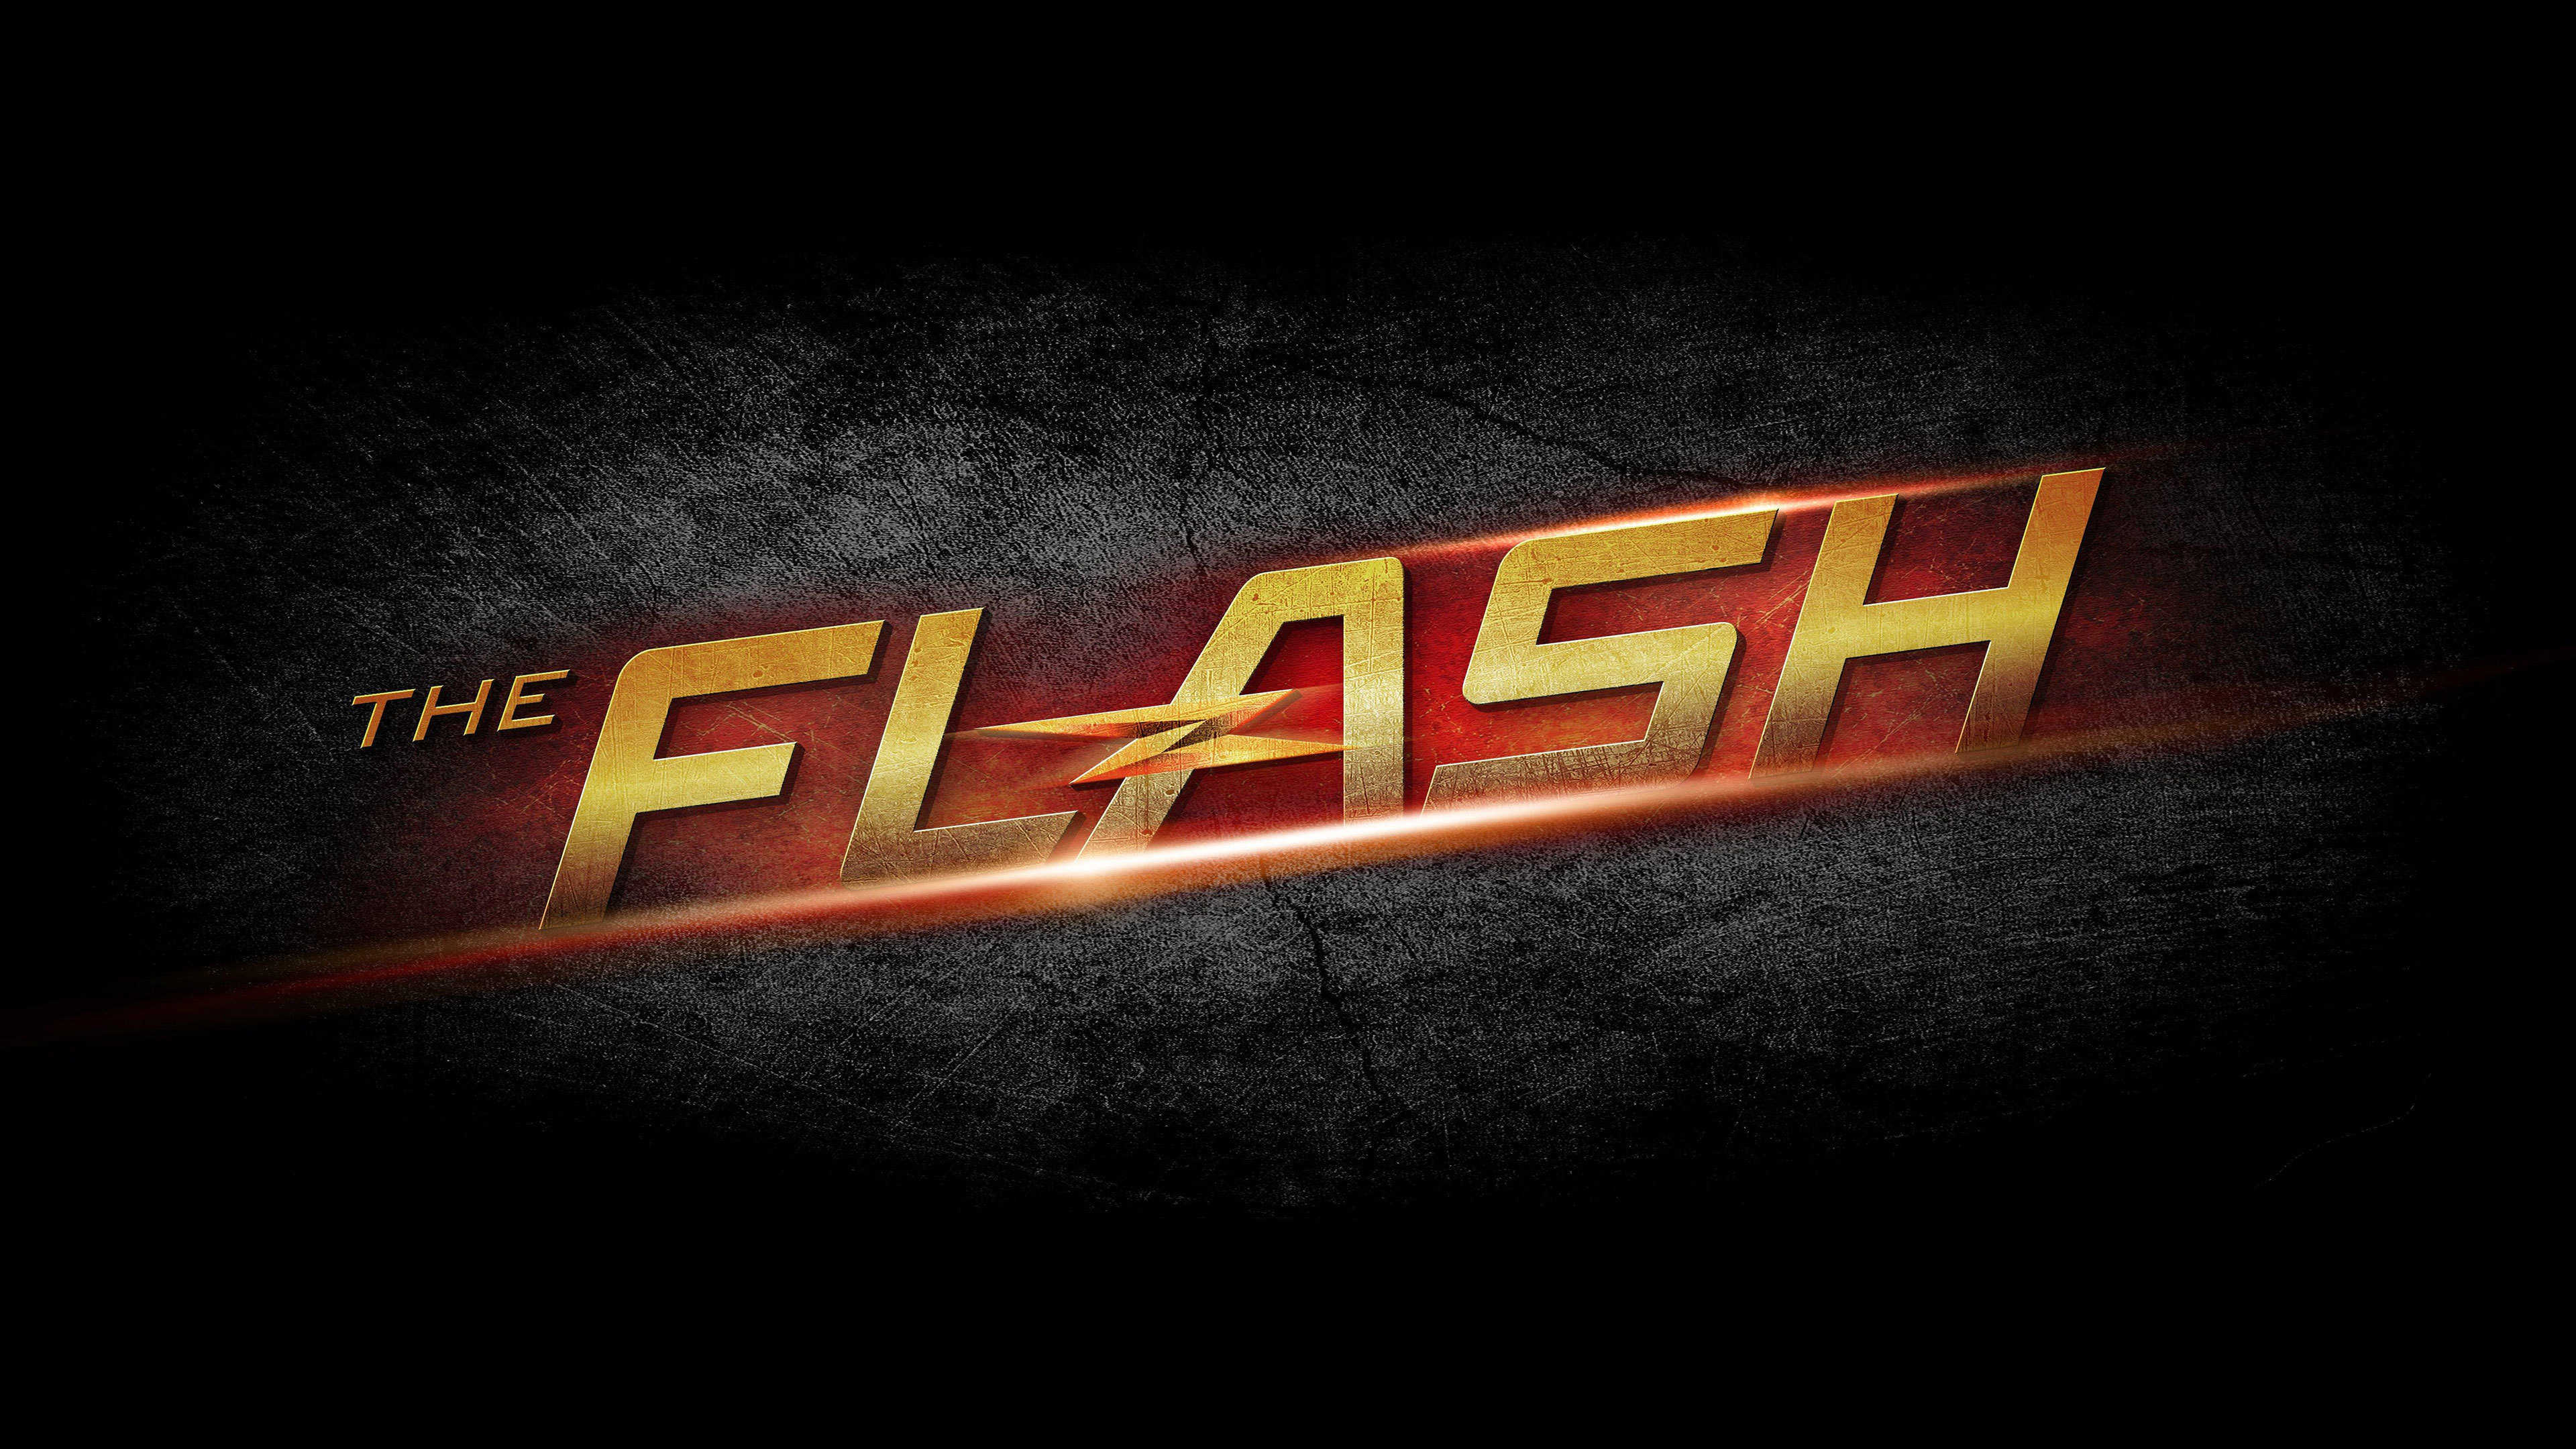 Download The Flash Logo Desktop Wallpaper hdwallwidecom HDWallWide